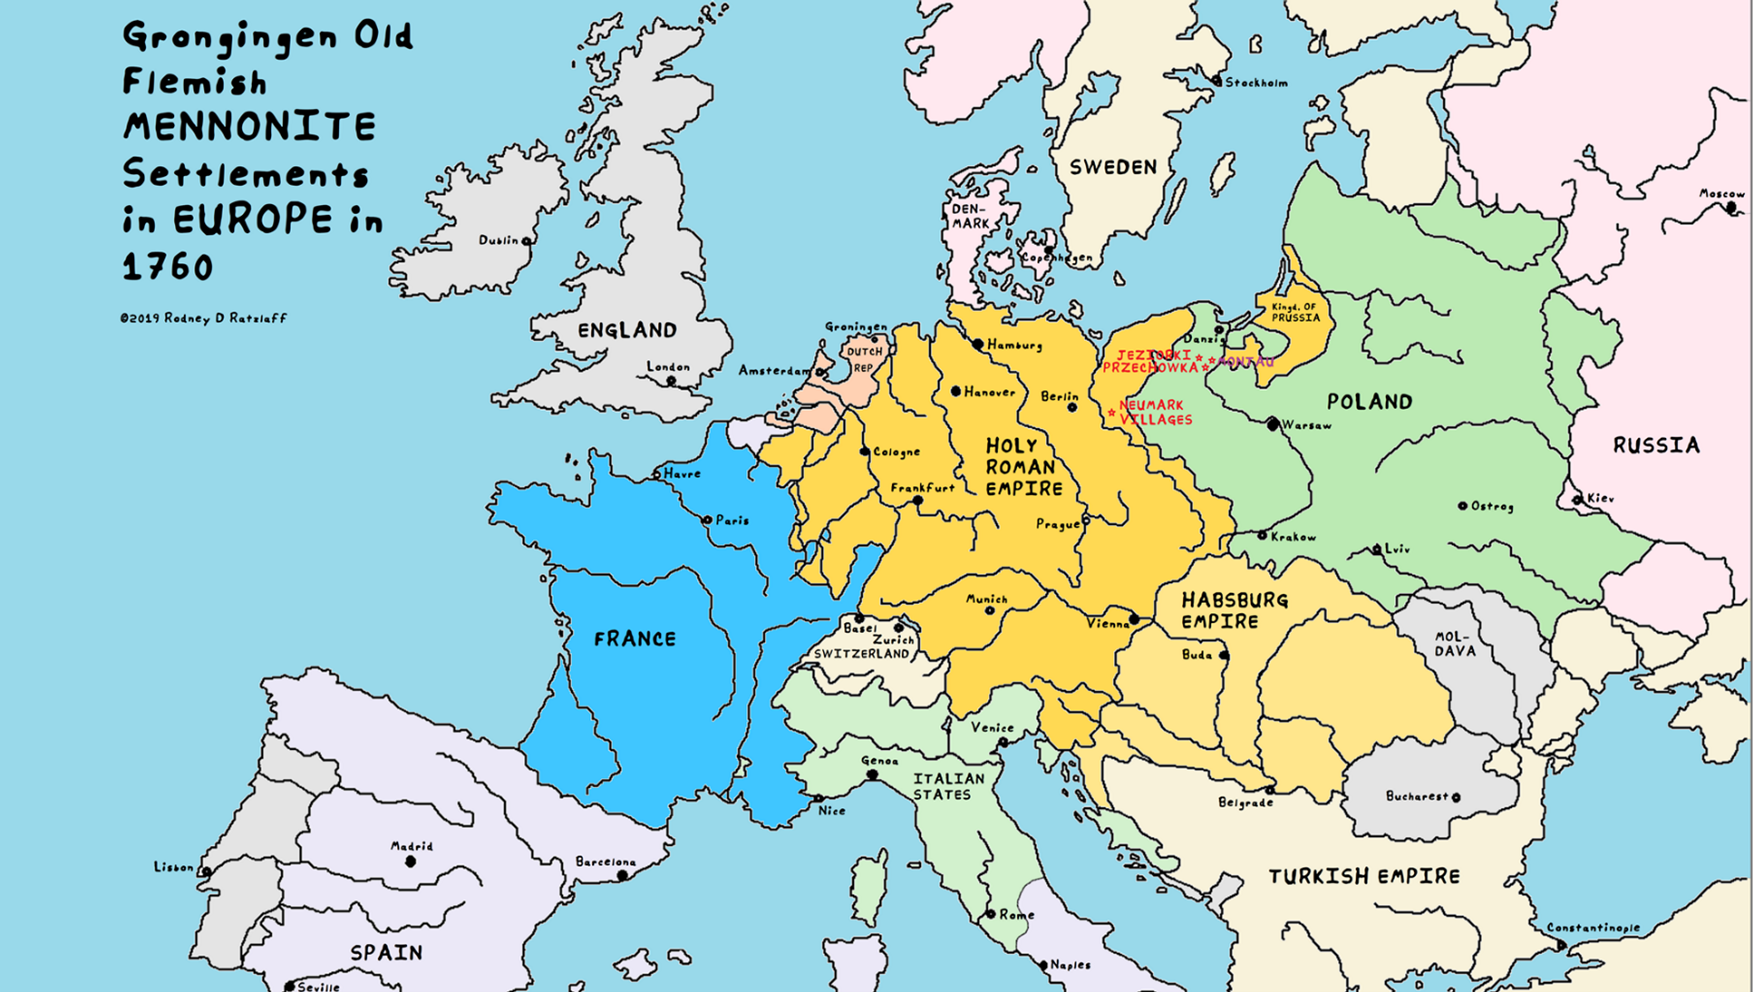 Europe about 1760 ©Rodney D. Ratzlaff, 2019